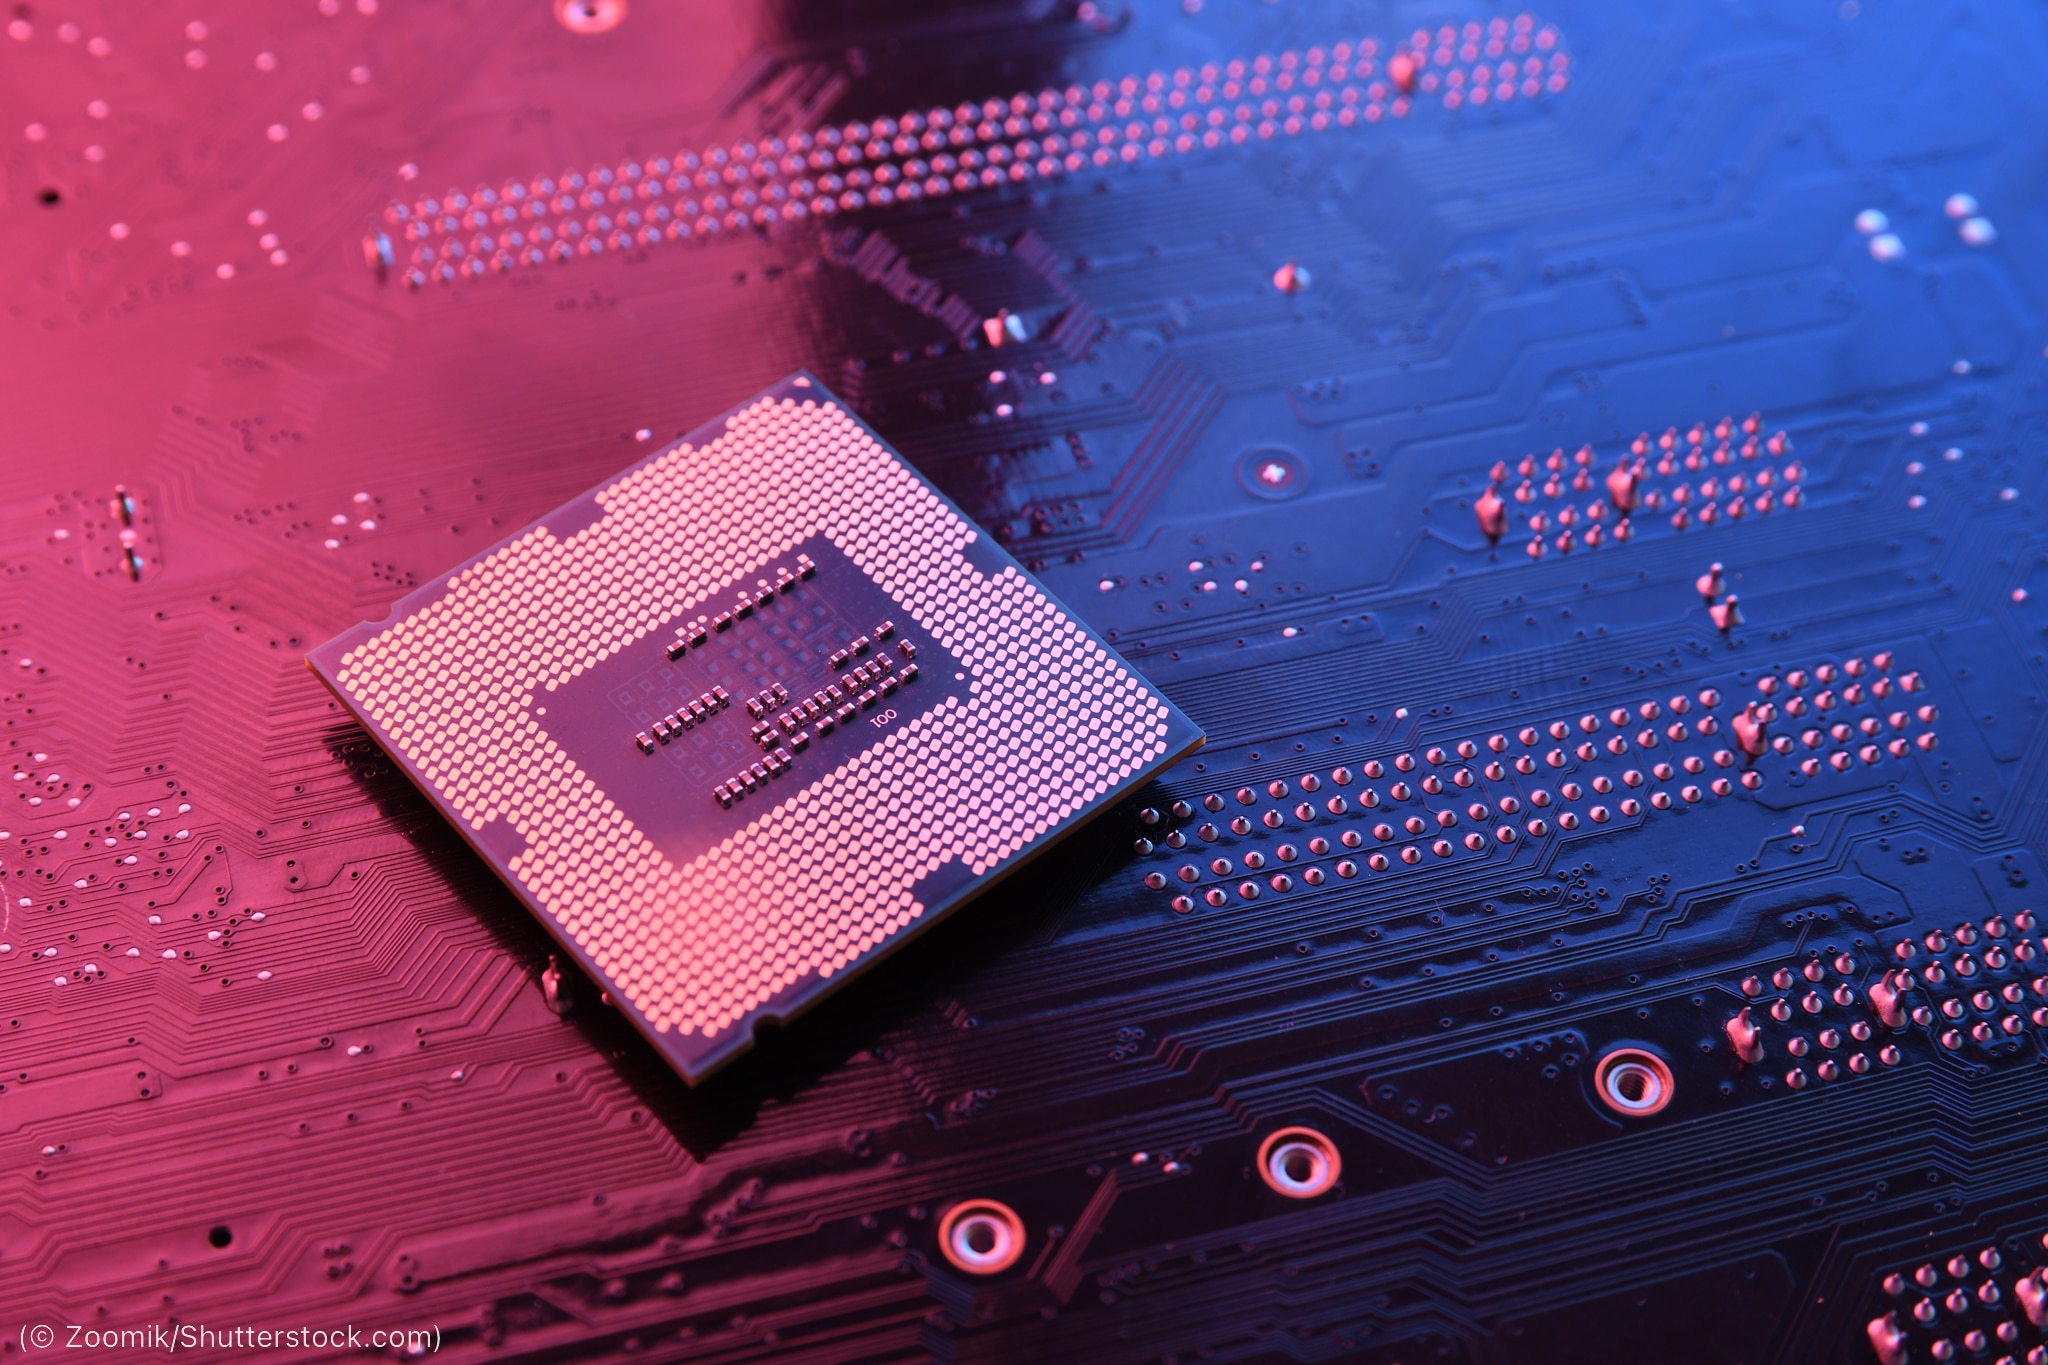 Computer processor chip on circuit board (© Zoomik/Shutterstock.com)